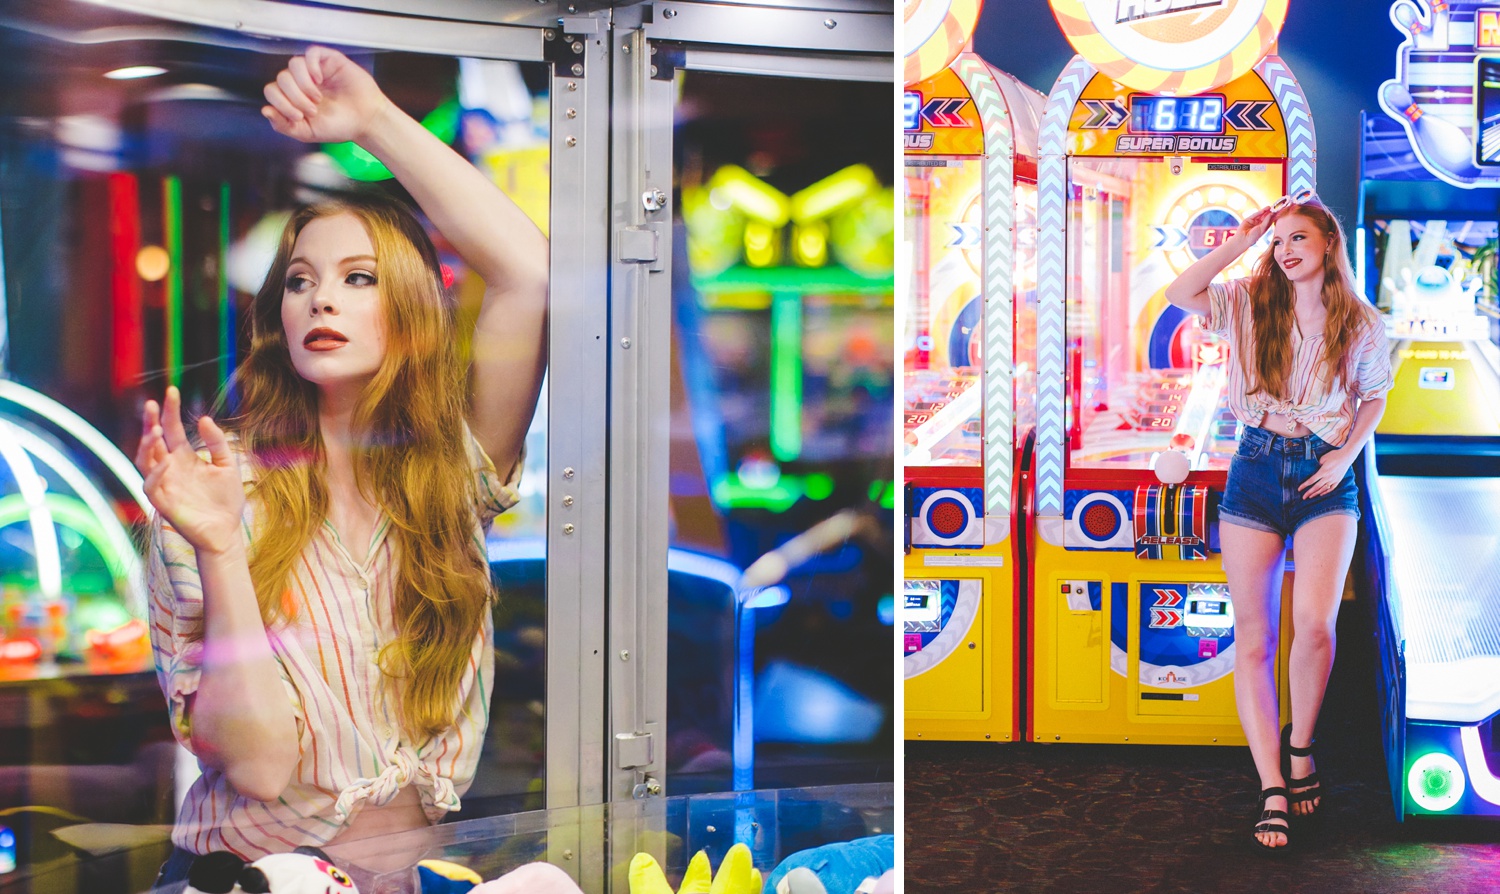 senior photographs taken in an arcade 